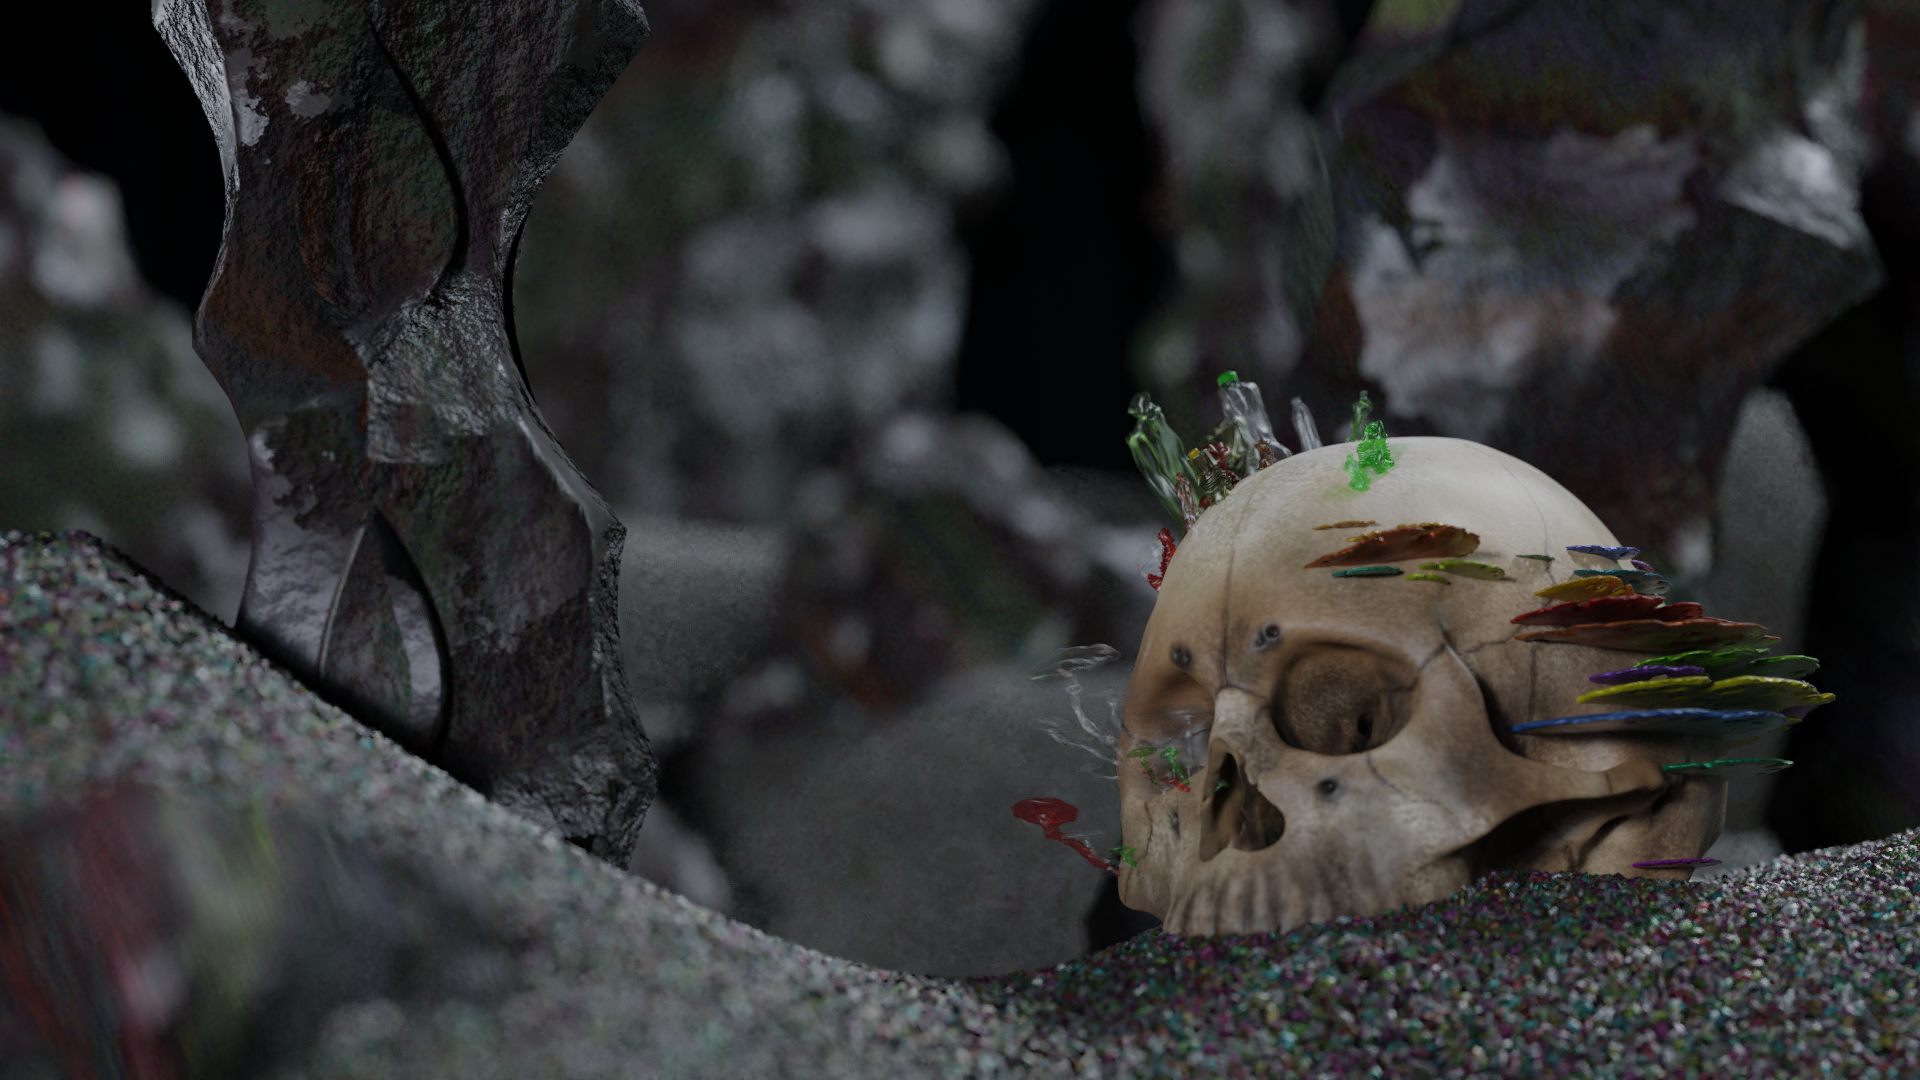 Mushrooms and Skull s19